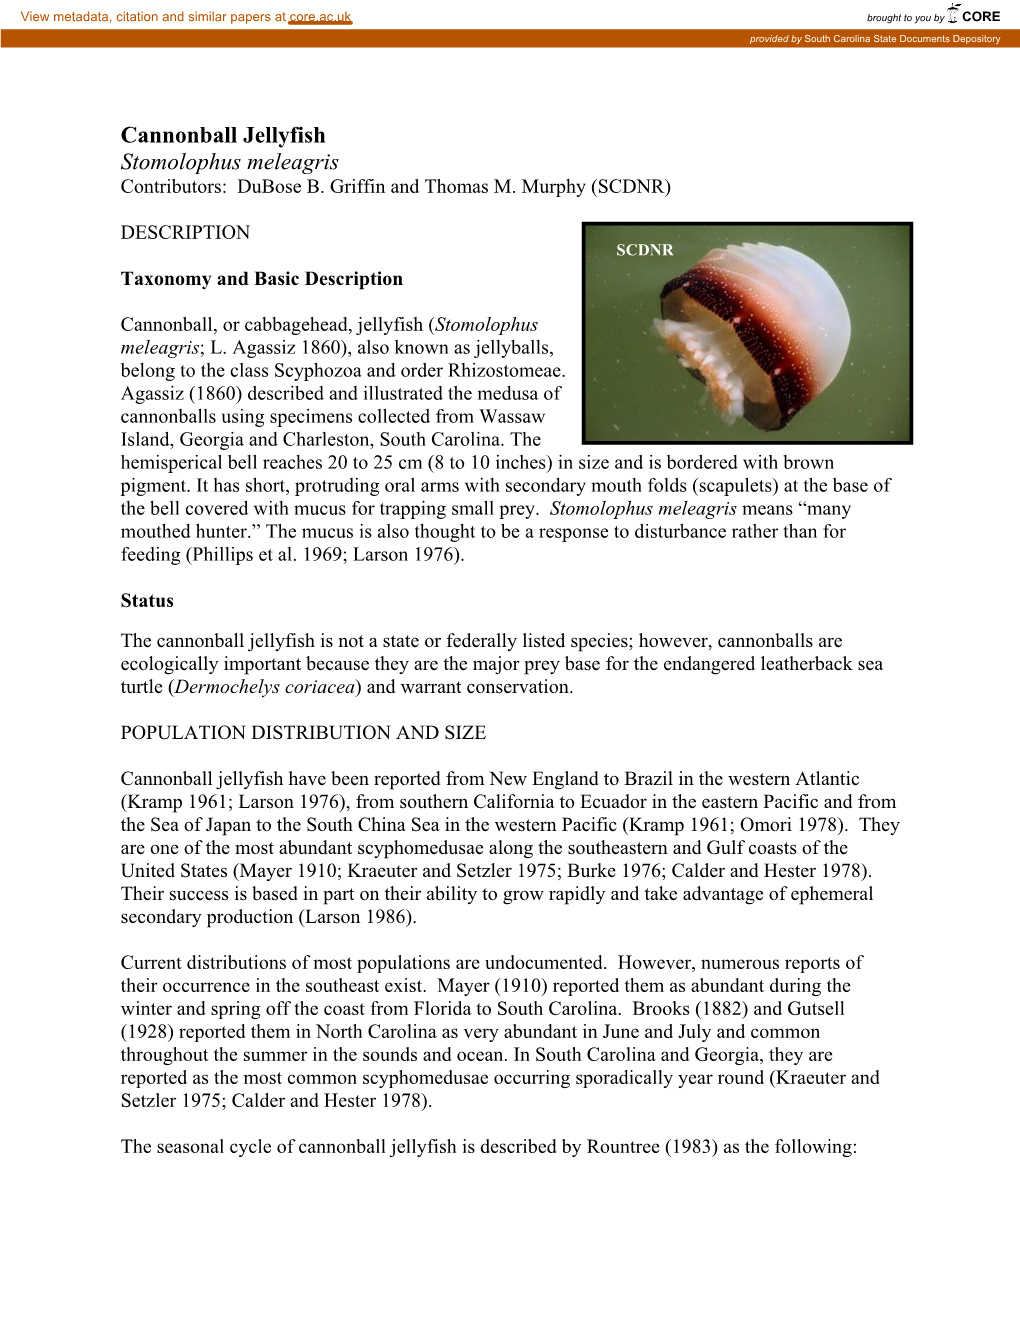 Cannonball Jellyfish Stomolophus Meleagris Contributors: Dubose B